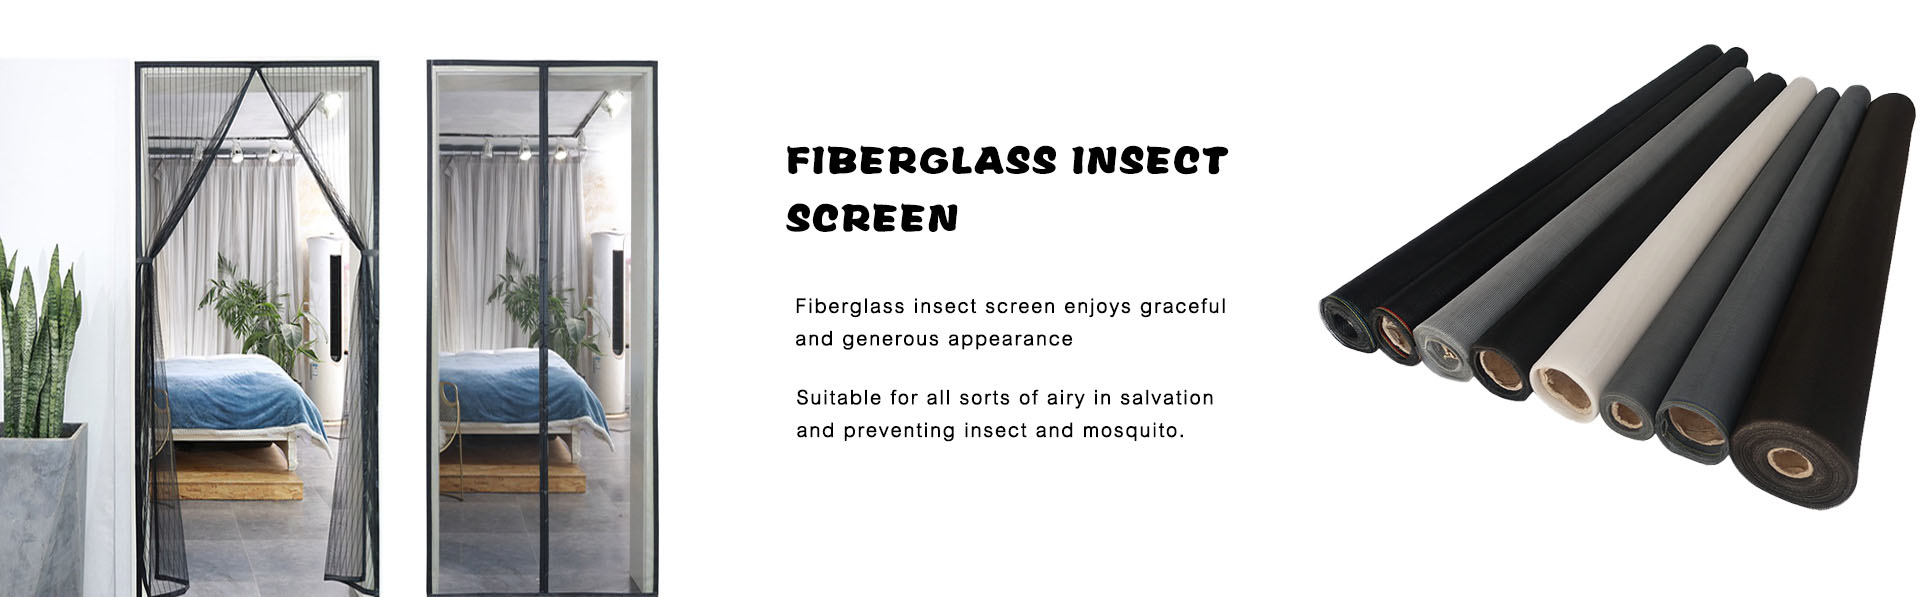 fiberglass insect screen